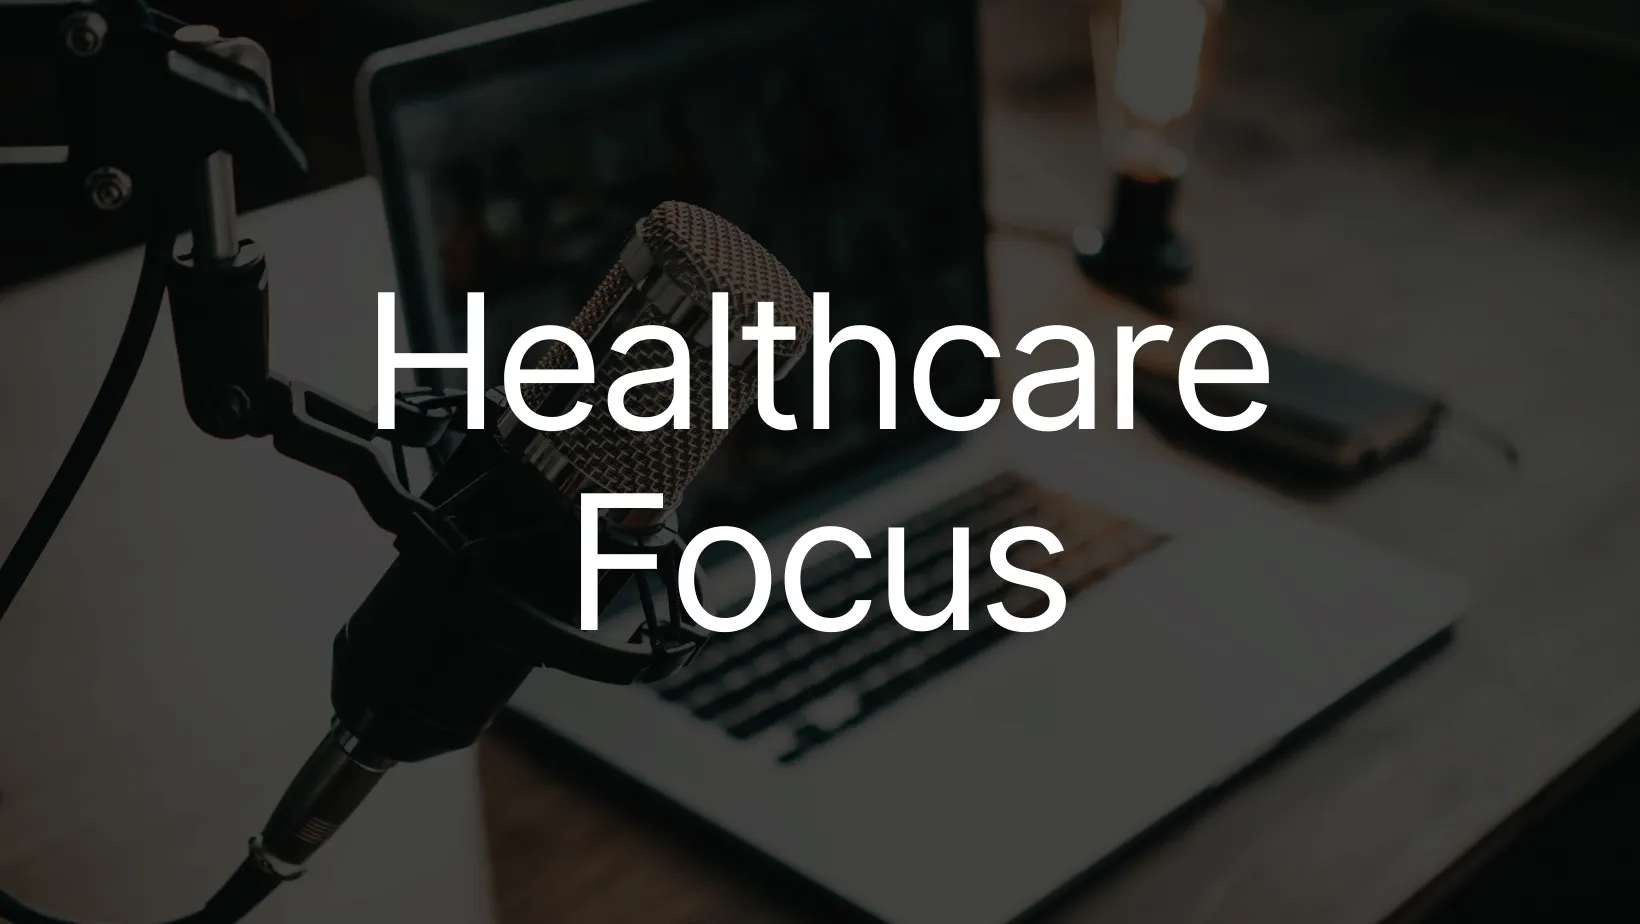 White Healthcare Focus podcast logo over a dark background.